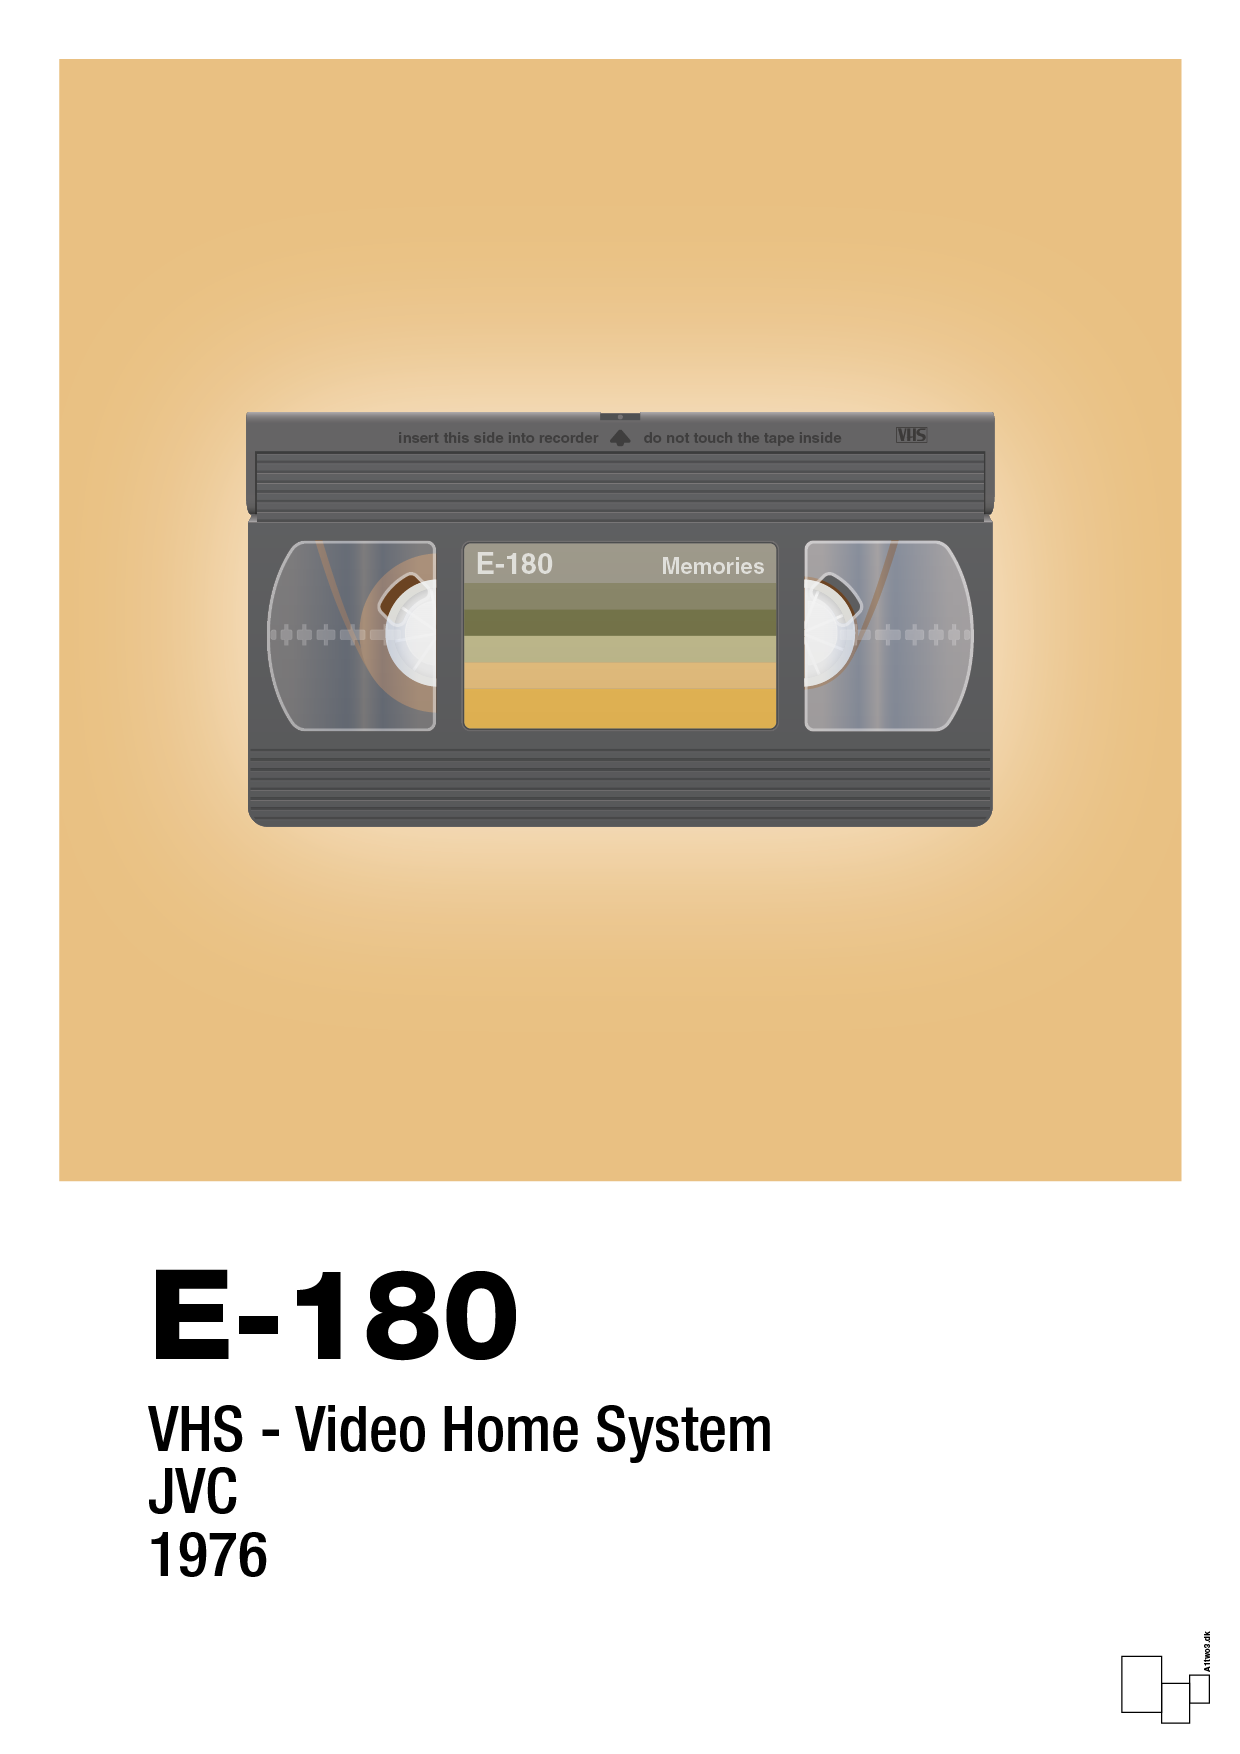 videobånd e-180 - Plakat med Grafik i Charismatic